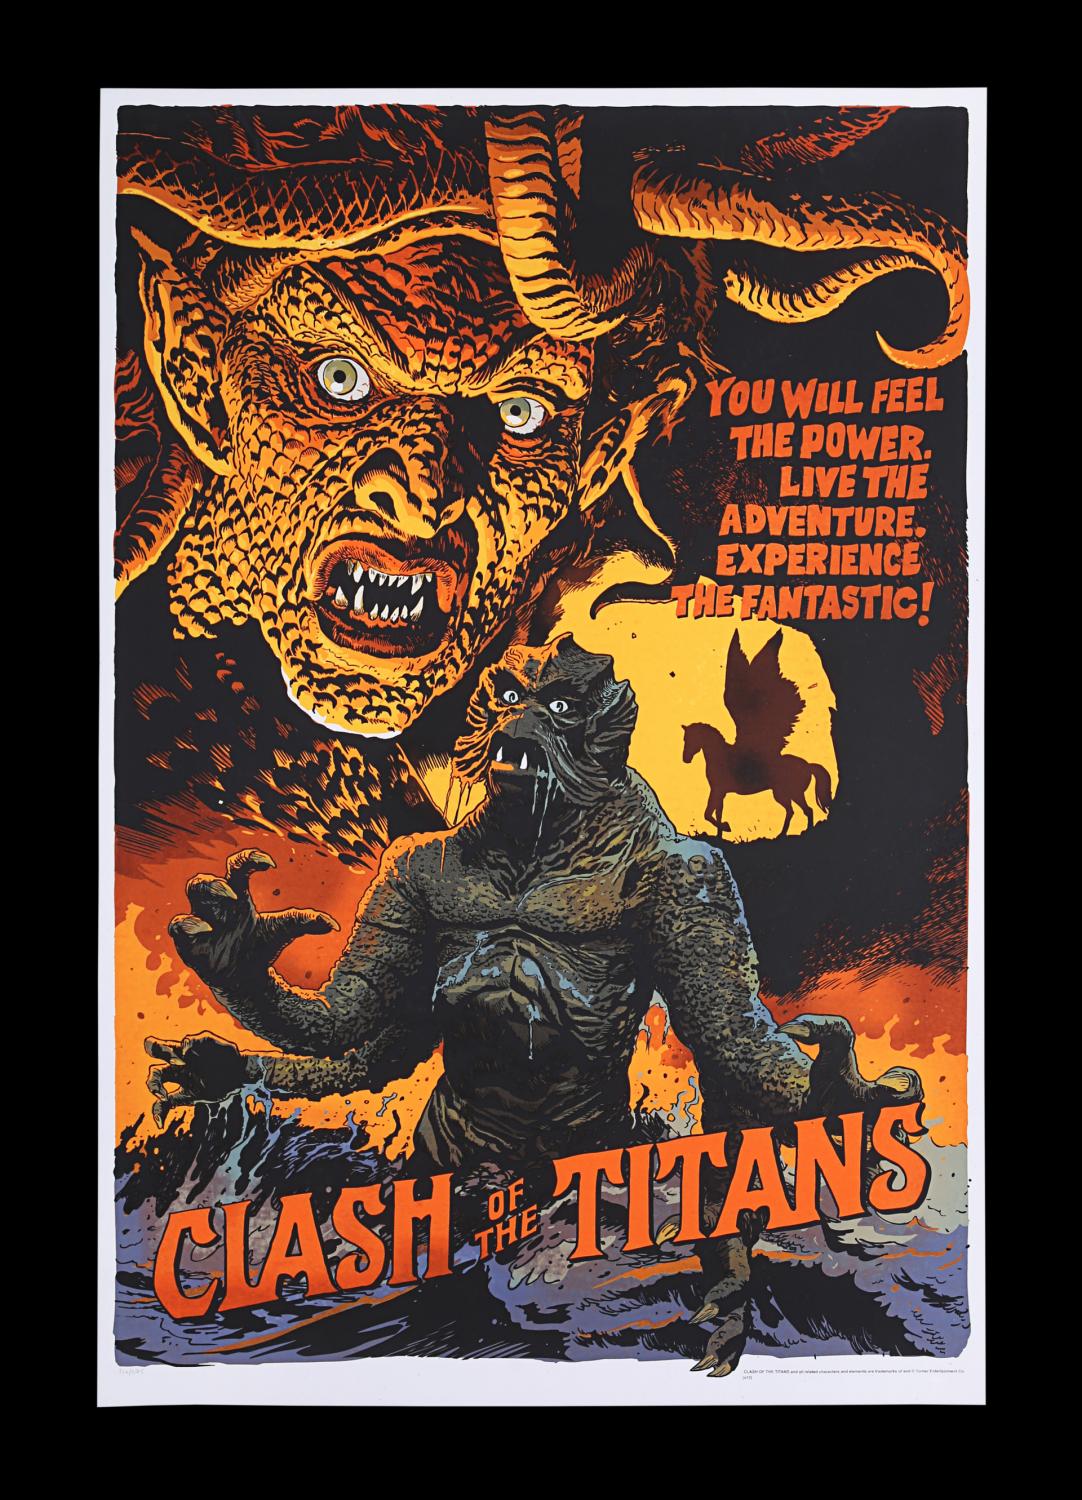 Clash of the Titans (1981) - Turner Classic Movies